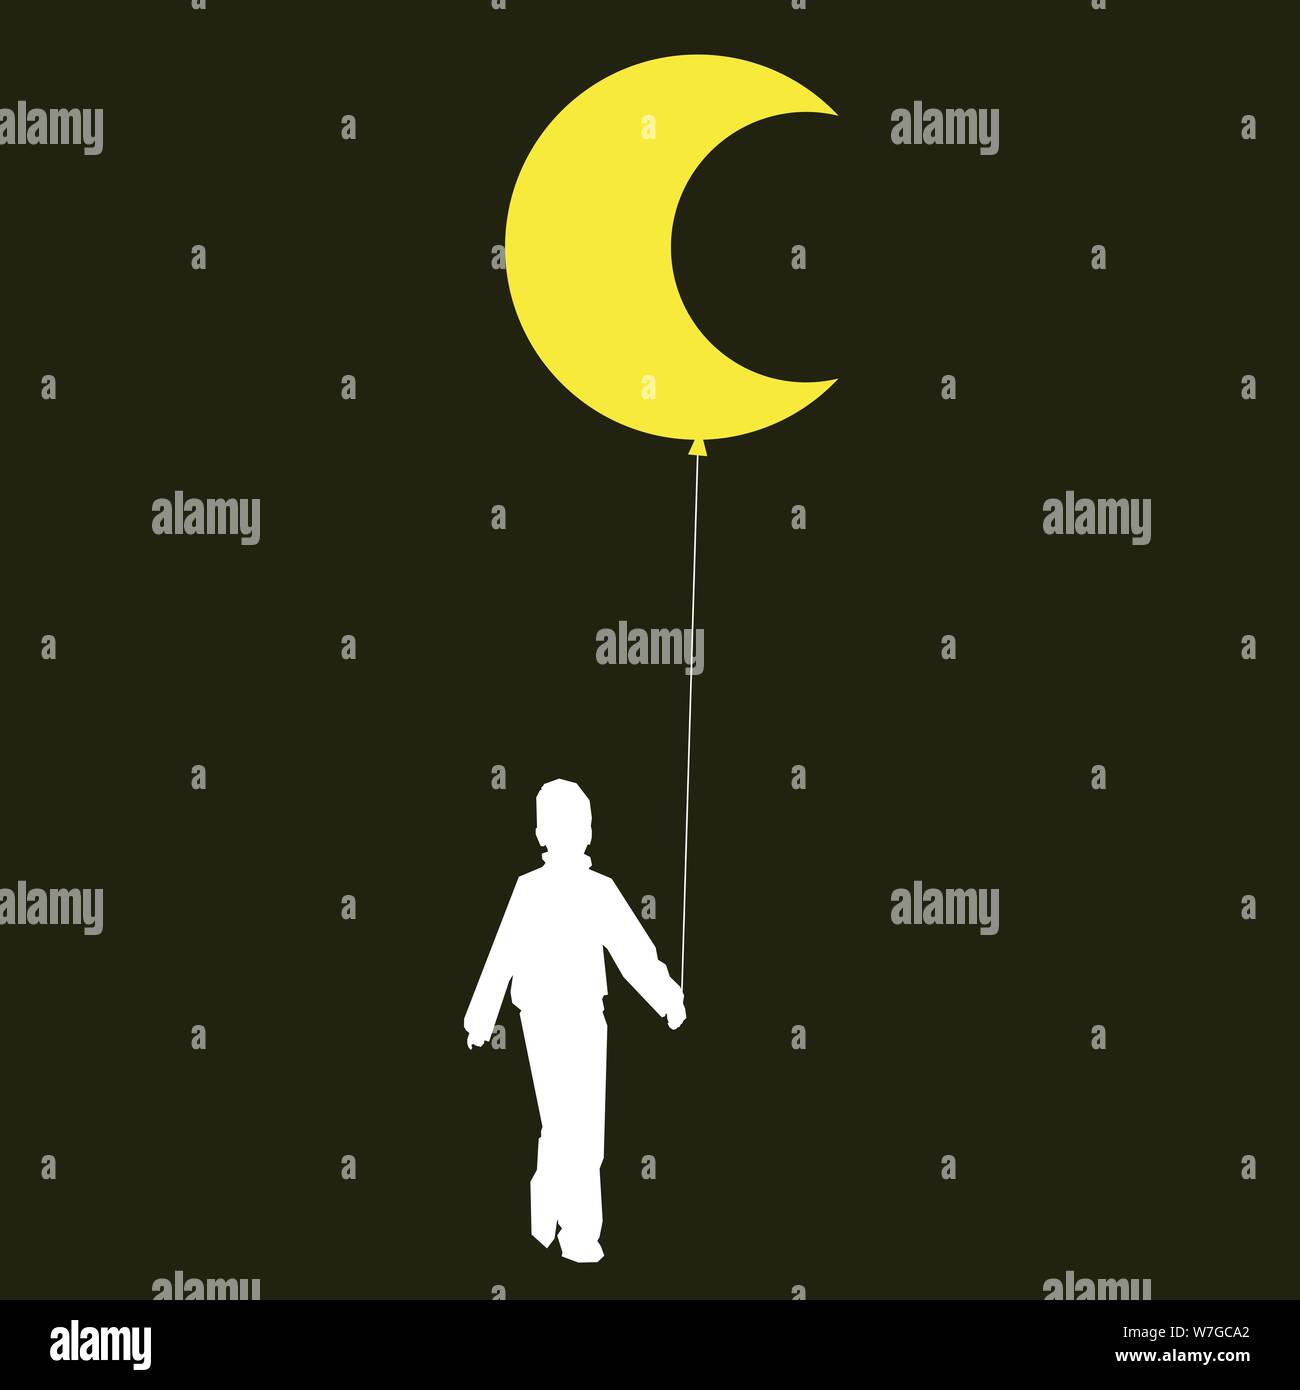 Vector illustration. Boy silhouette with a moon balloon. Stock Vector